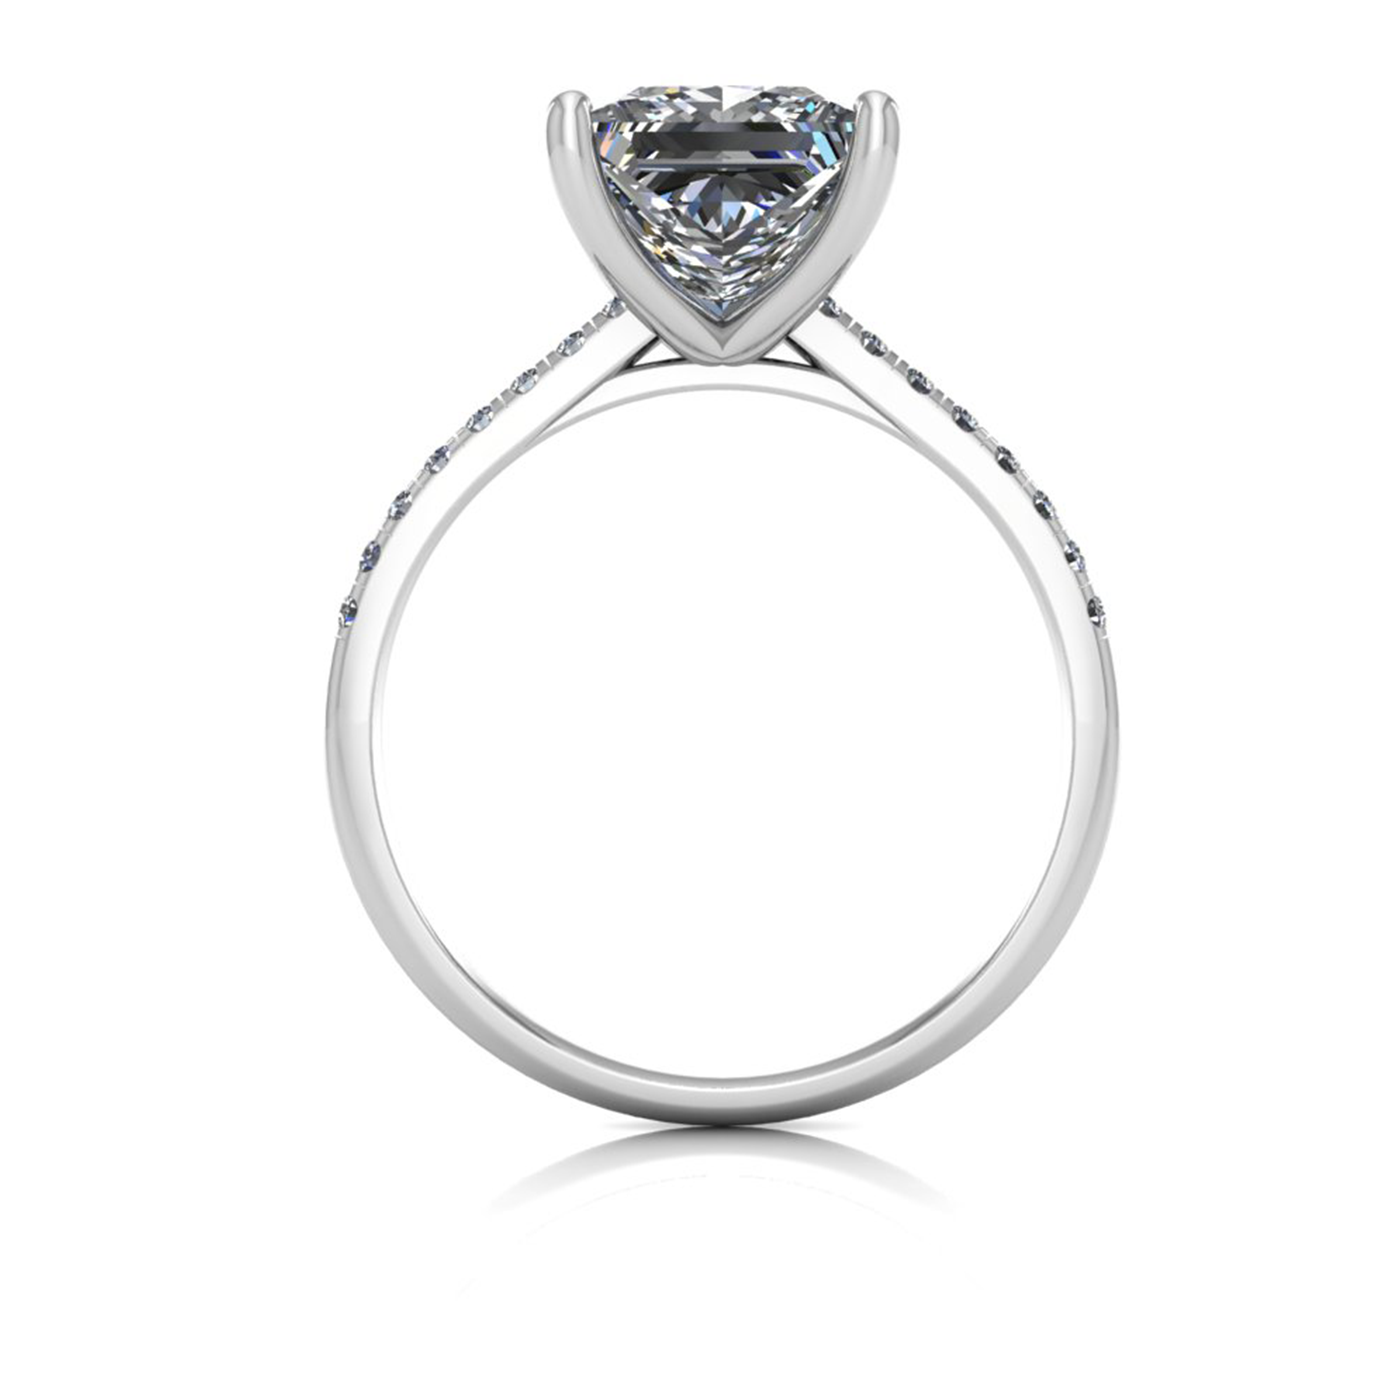 18k white gold 2,50 ct 4 prongs princess cut diamond engagement ring with whisper thin pavÉ set band